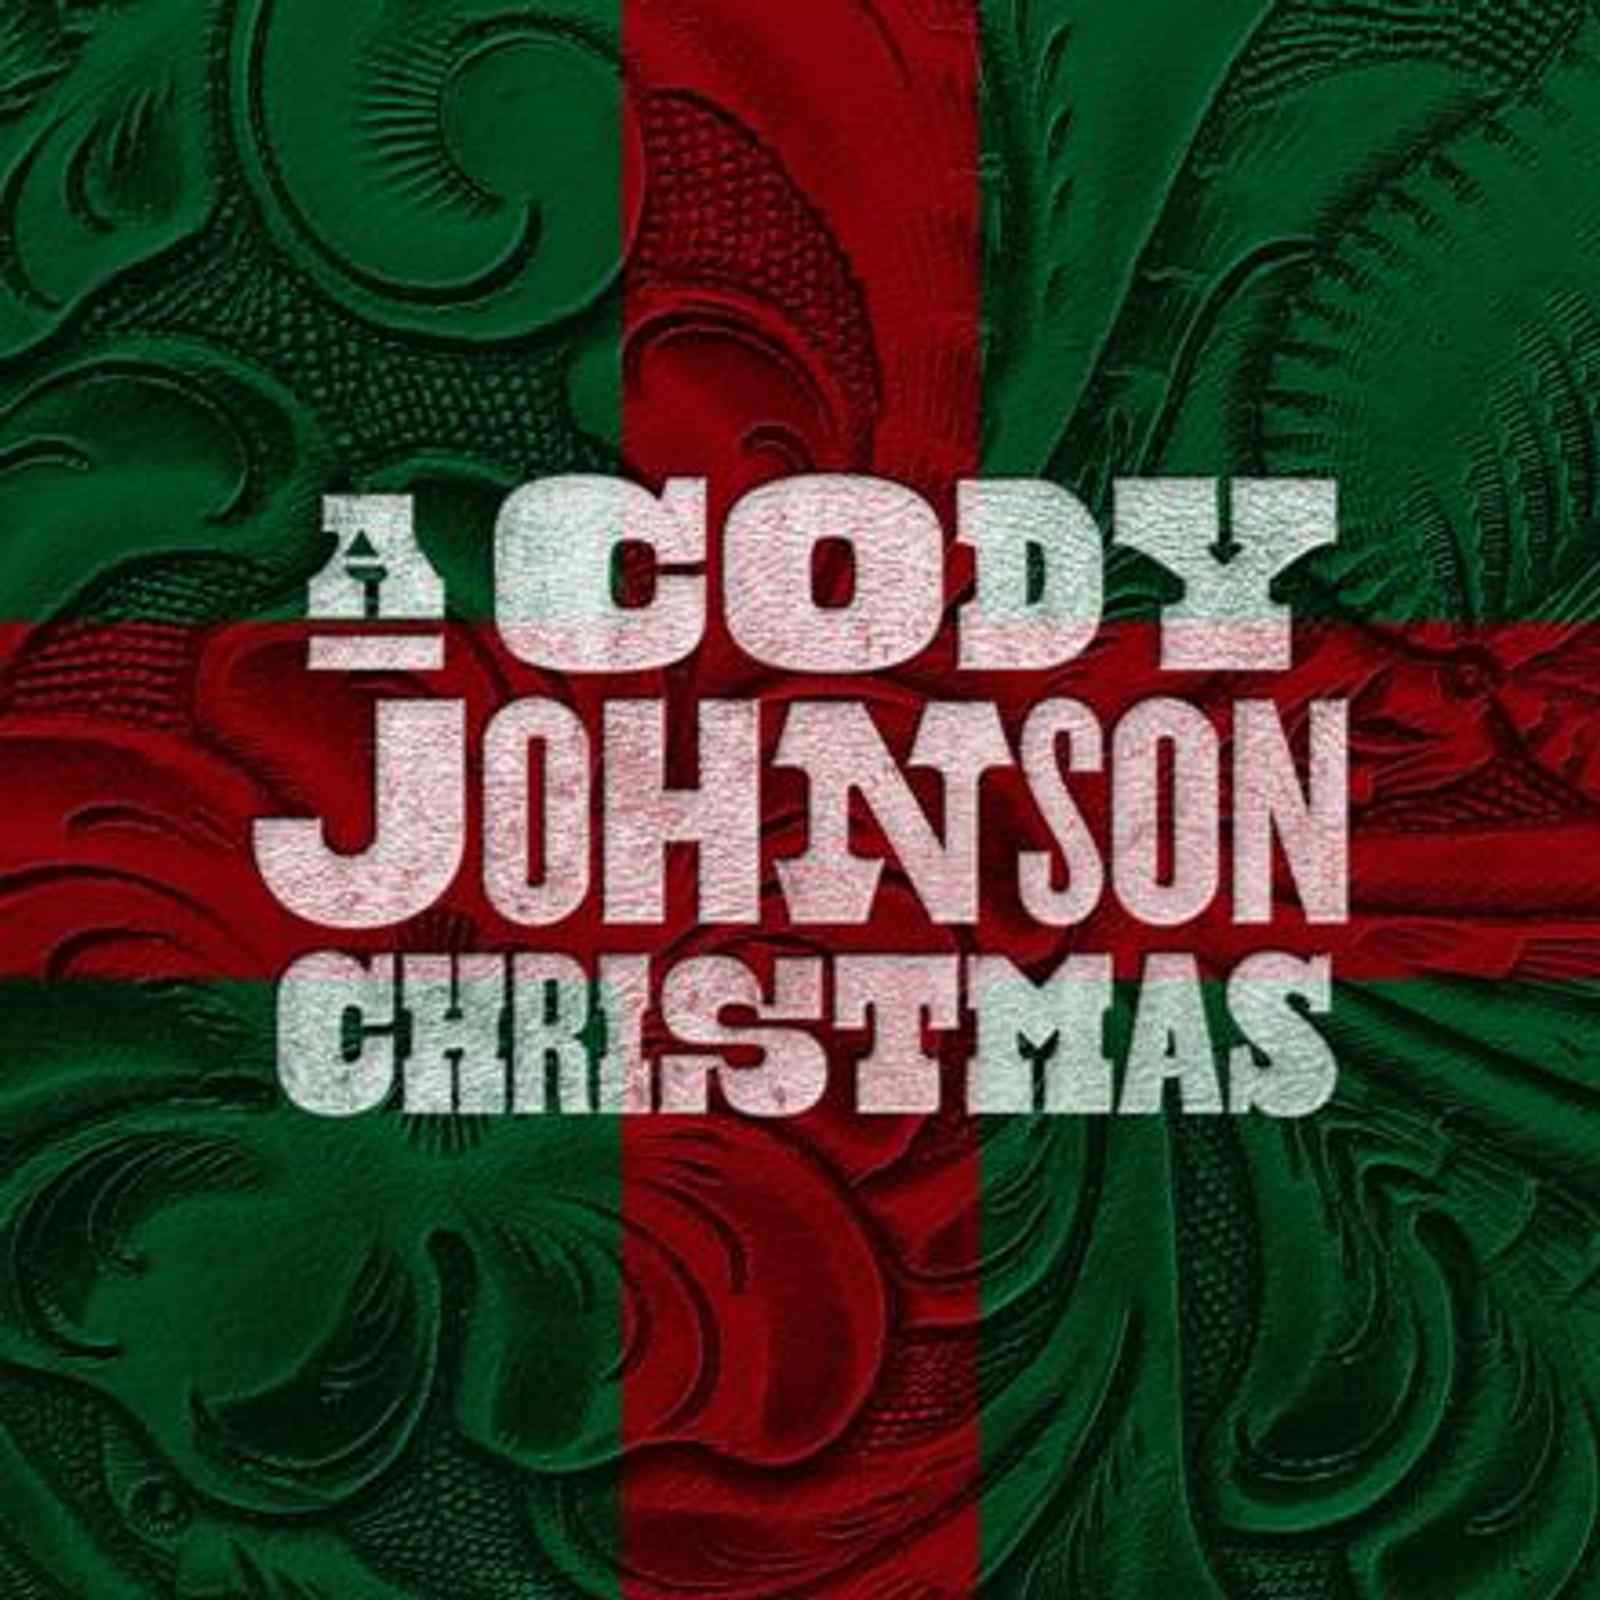 A Cody Johnson Christmas by Cody Johnson